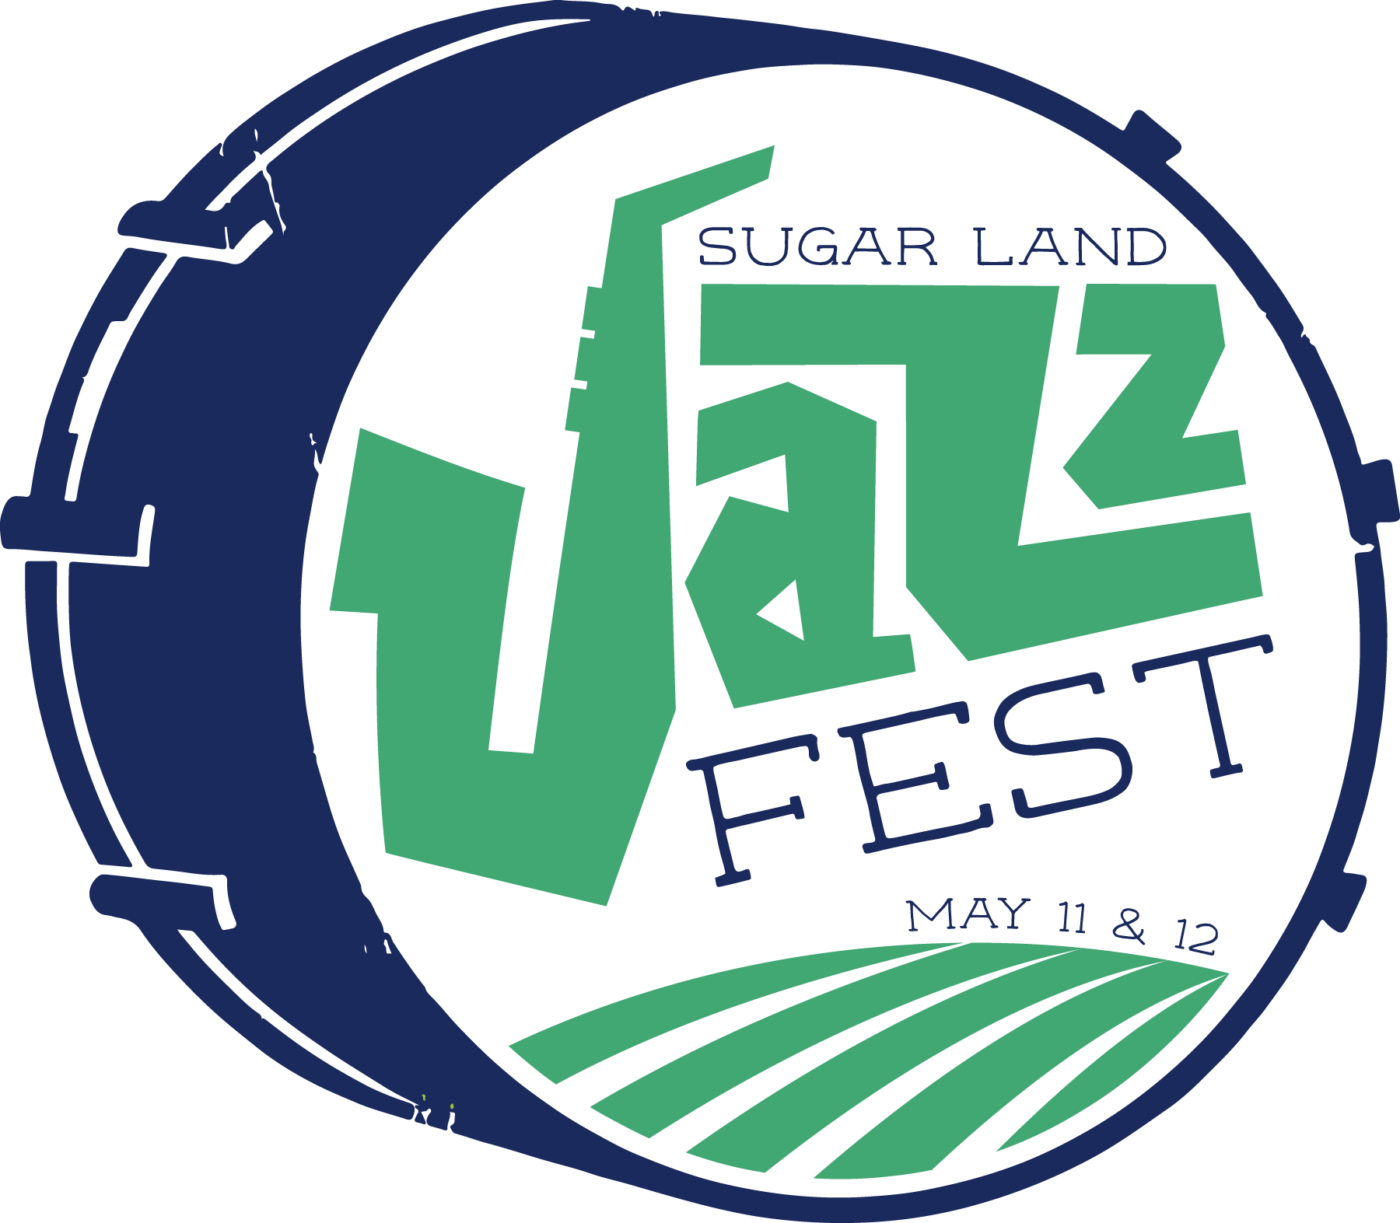 Sugar Land Jazz Festival Sugar Land, TX